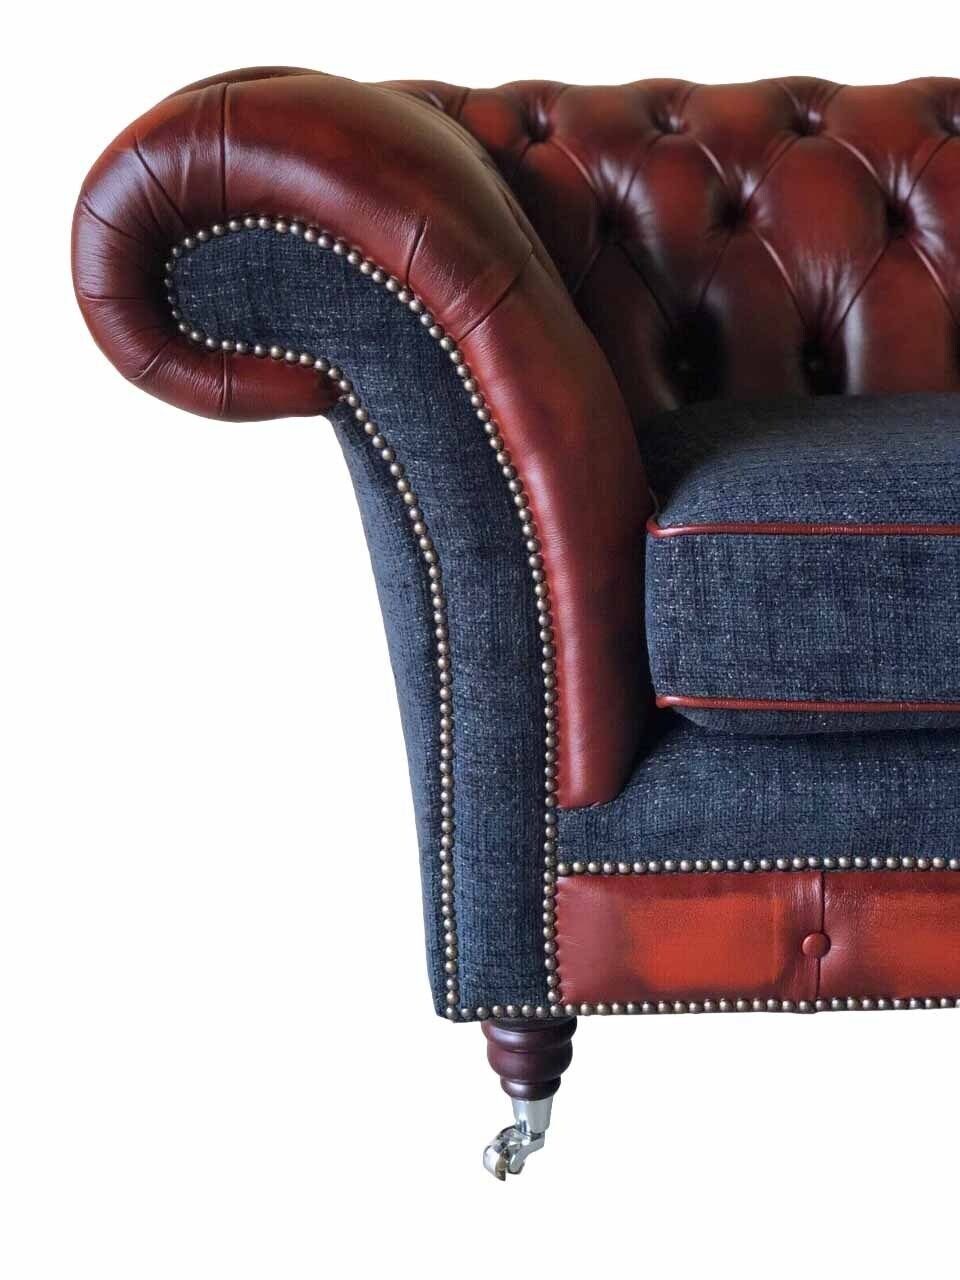 Textil Sofa Leder Couch Chesterfield in Made Sitzer Sofa Braun JVmoebel Europe 3 Neu, Design Polster